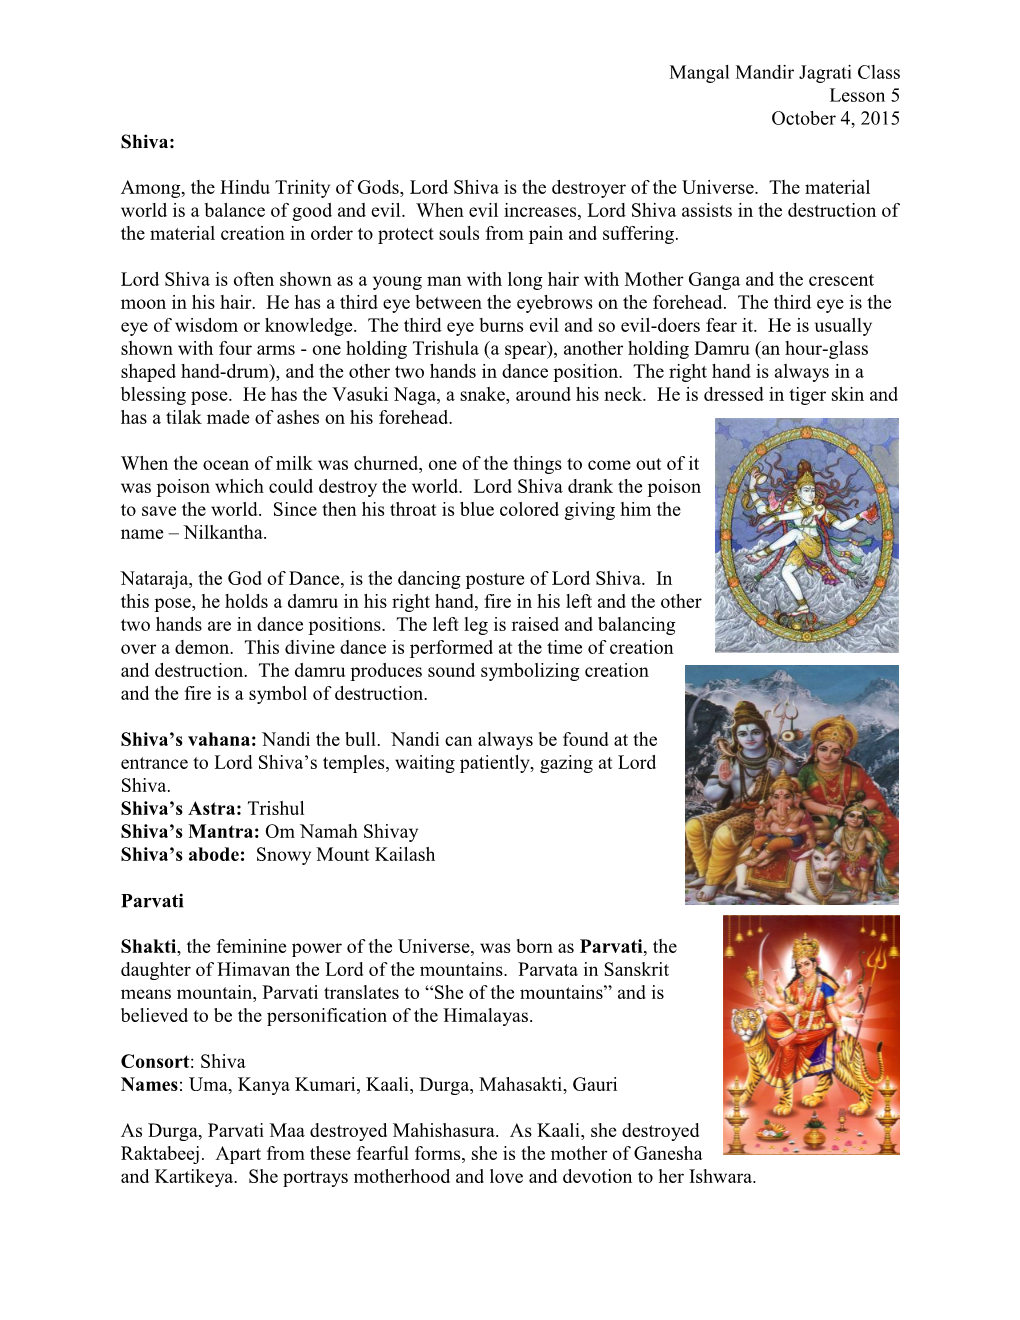 Lesson 5 – Shiva and Parvati